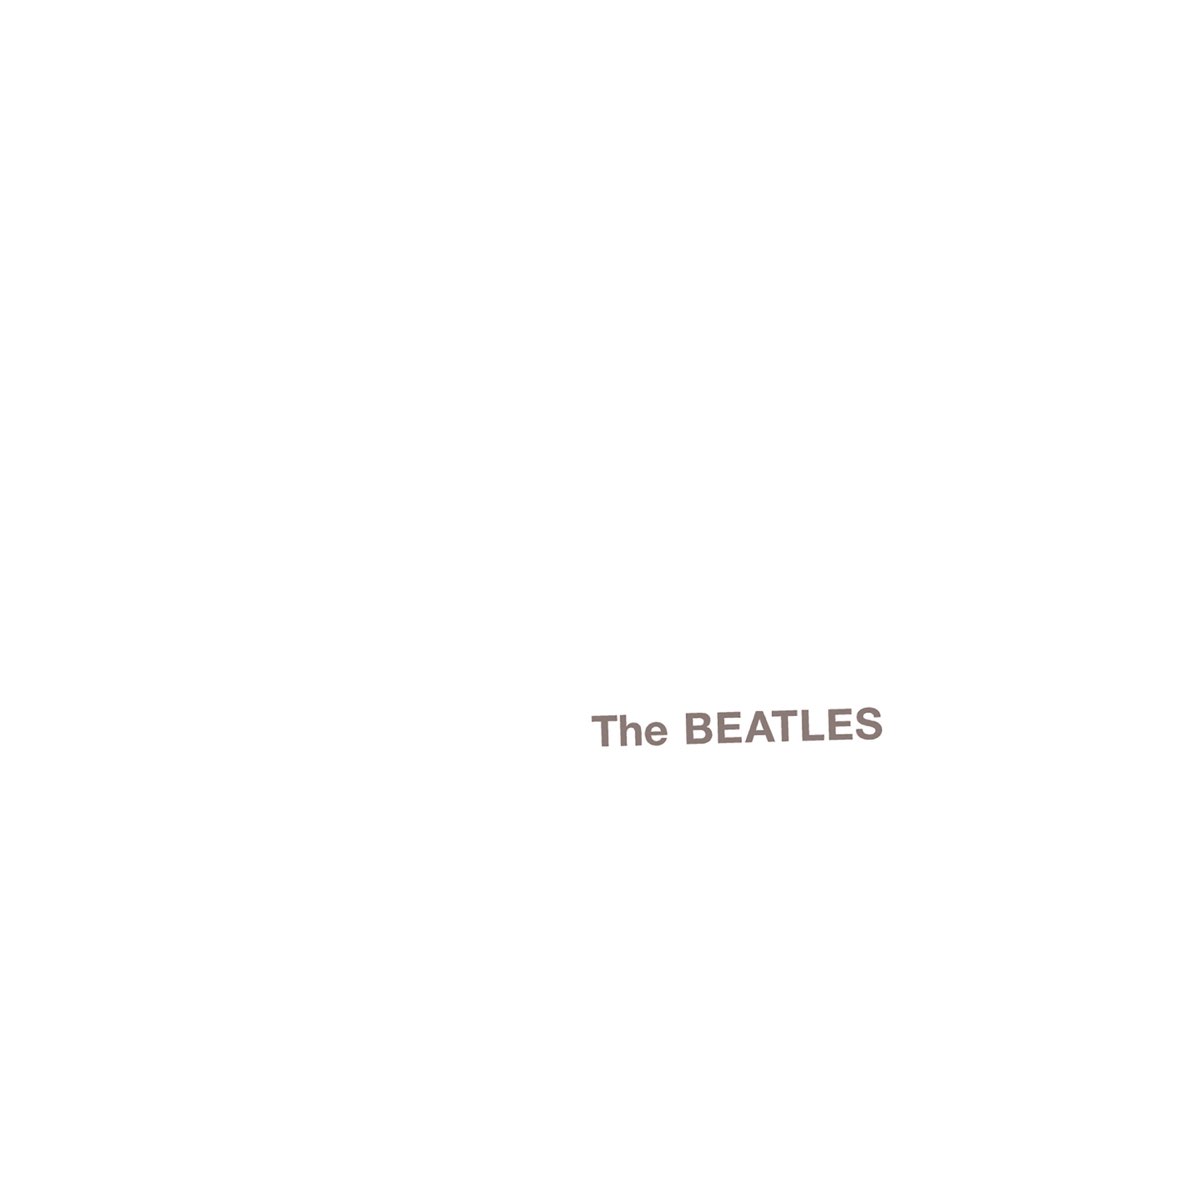 ‎The Beatles (The White Album) - Album by The Beatles - Apple Music